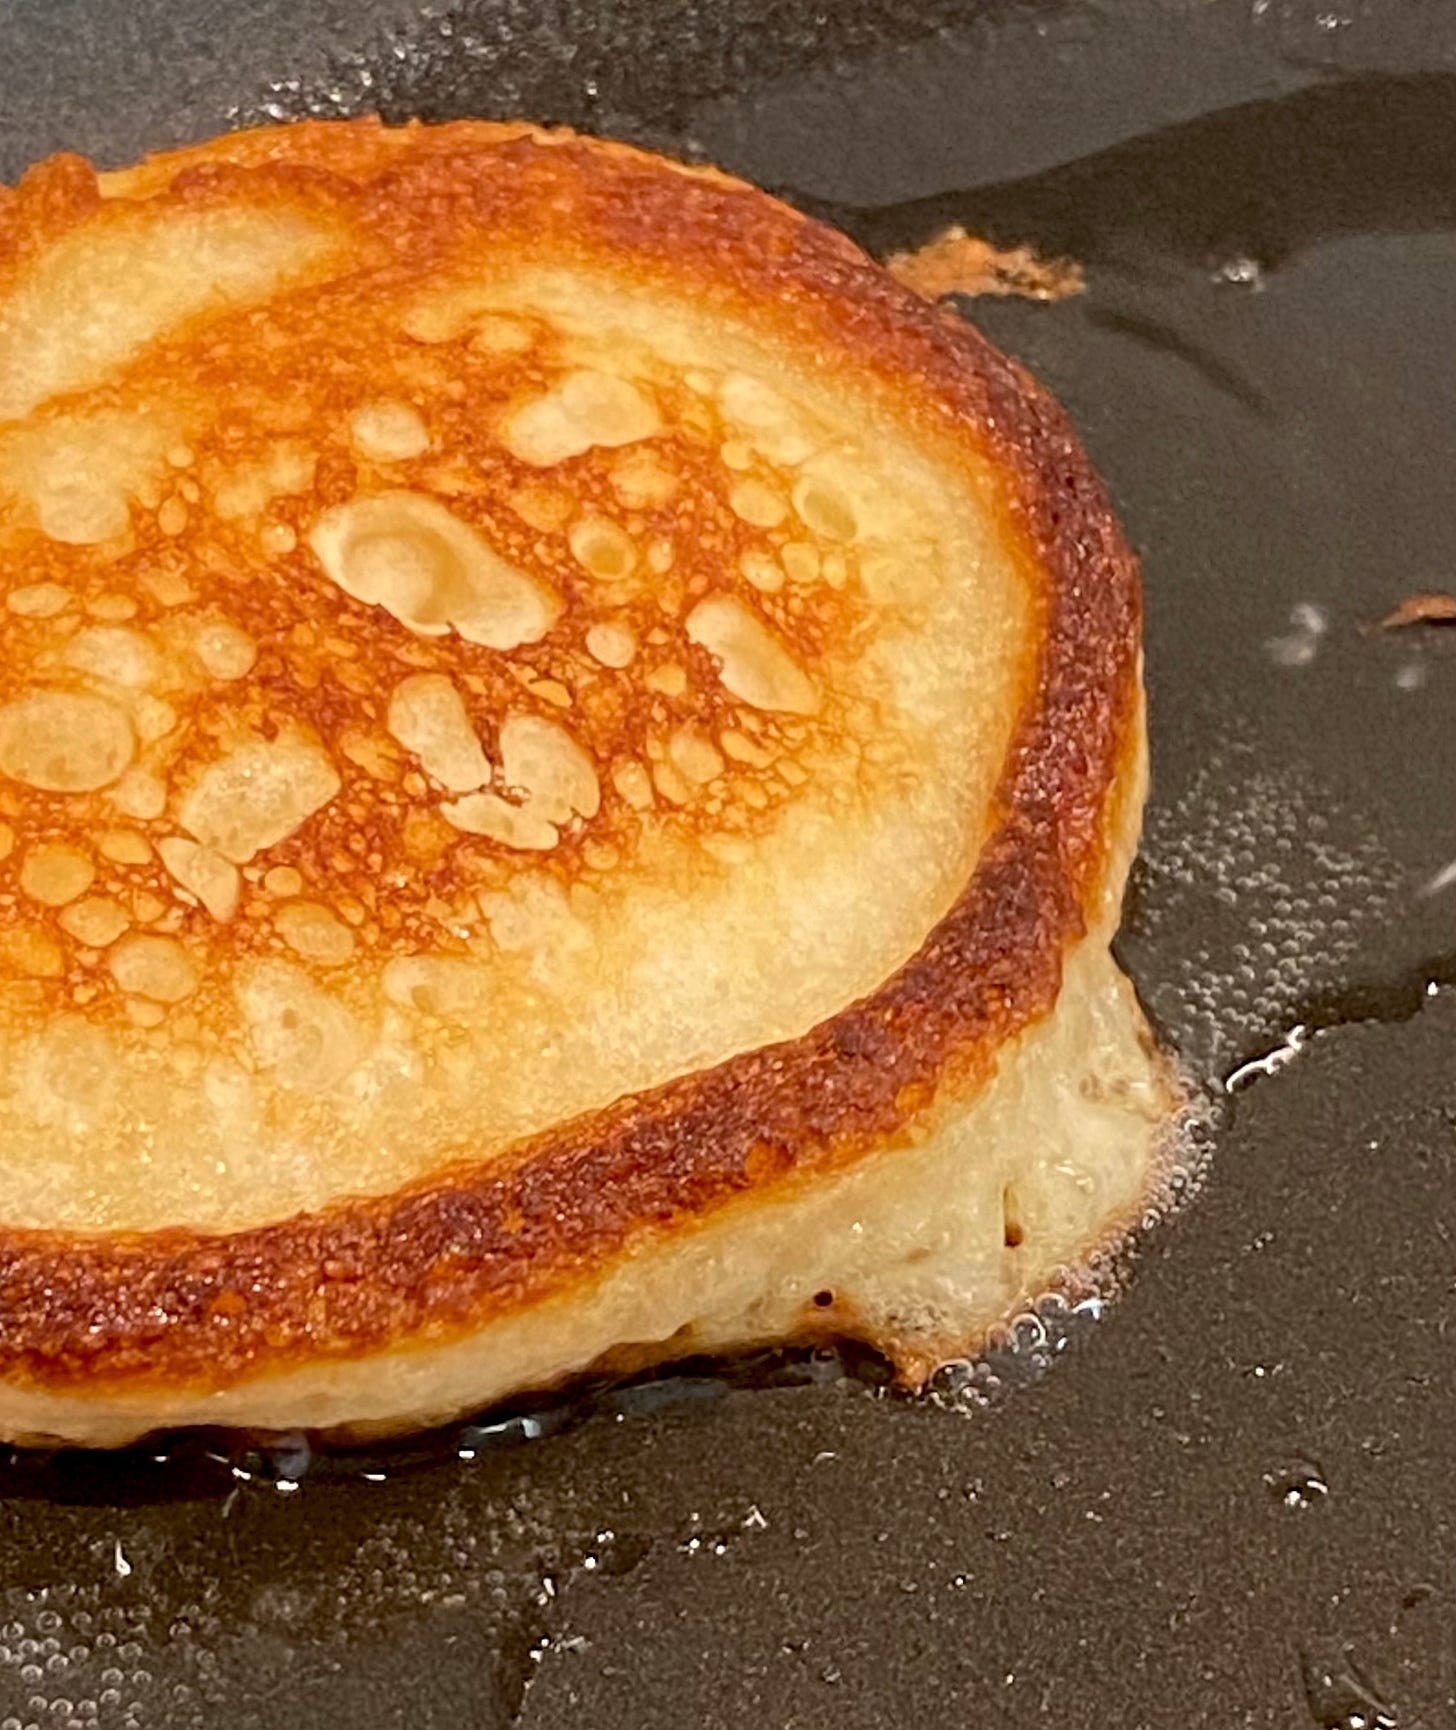 Let's Talk About Pancakes With Crispy Edges